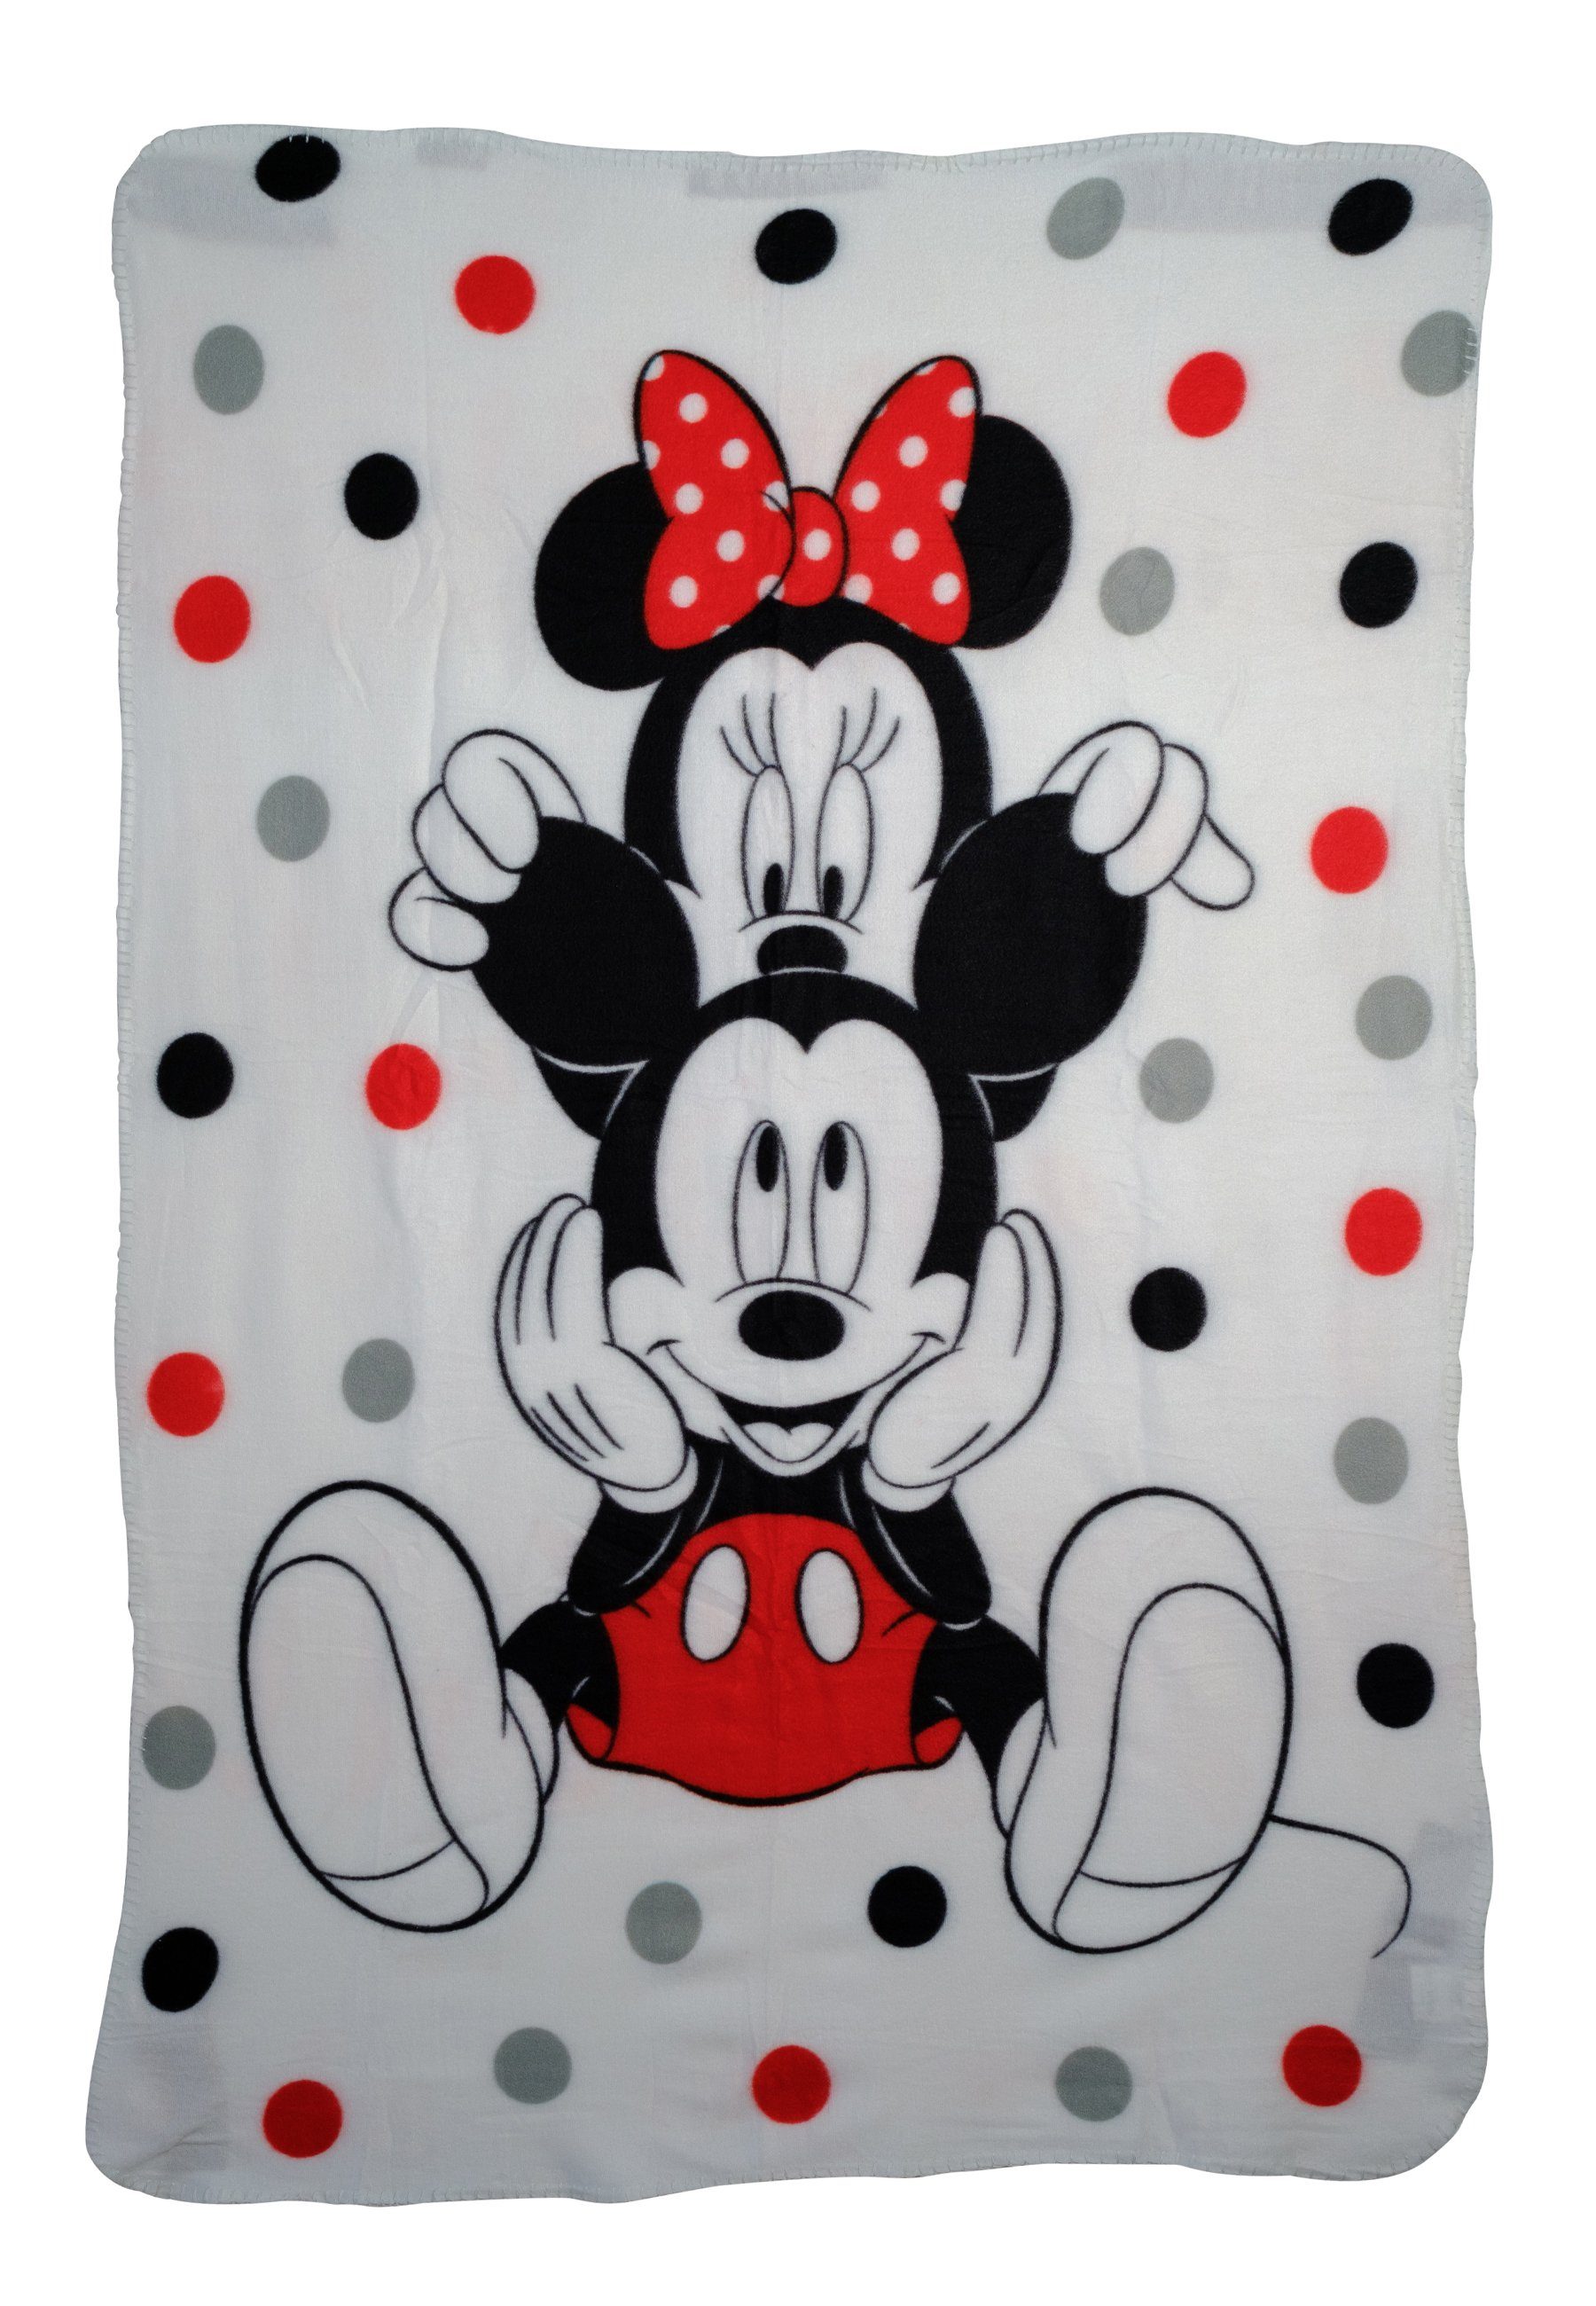 Disney Babydecke Mickey Mouse Flauschdecke Kuscheldecke Krabbel Decke Tagesdecke 